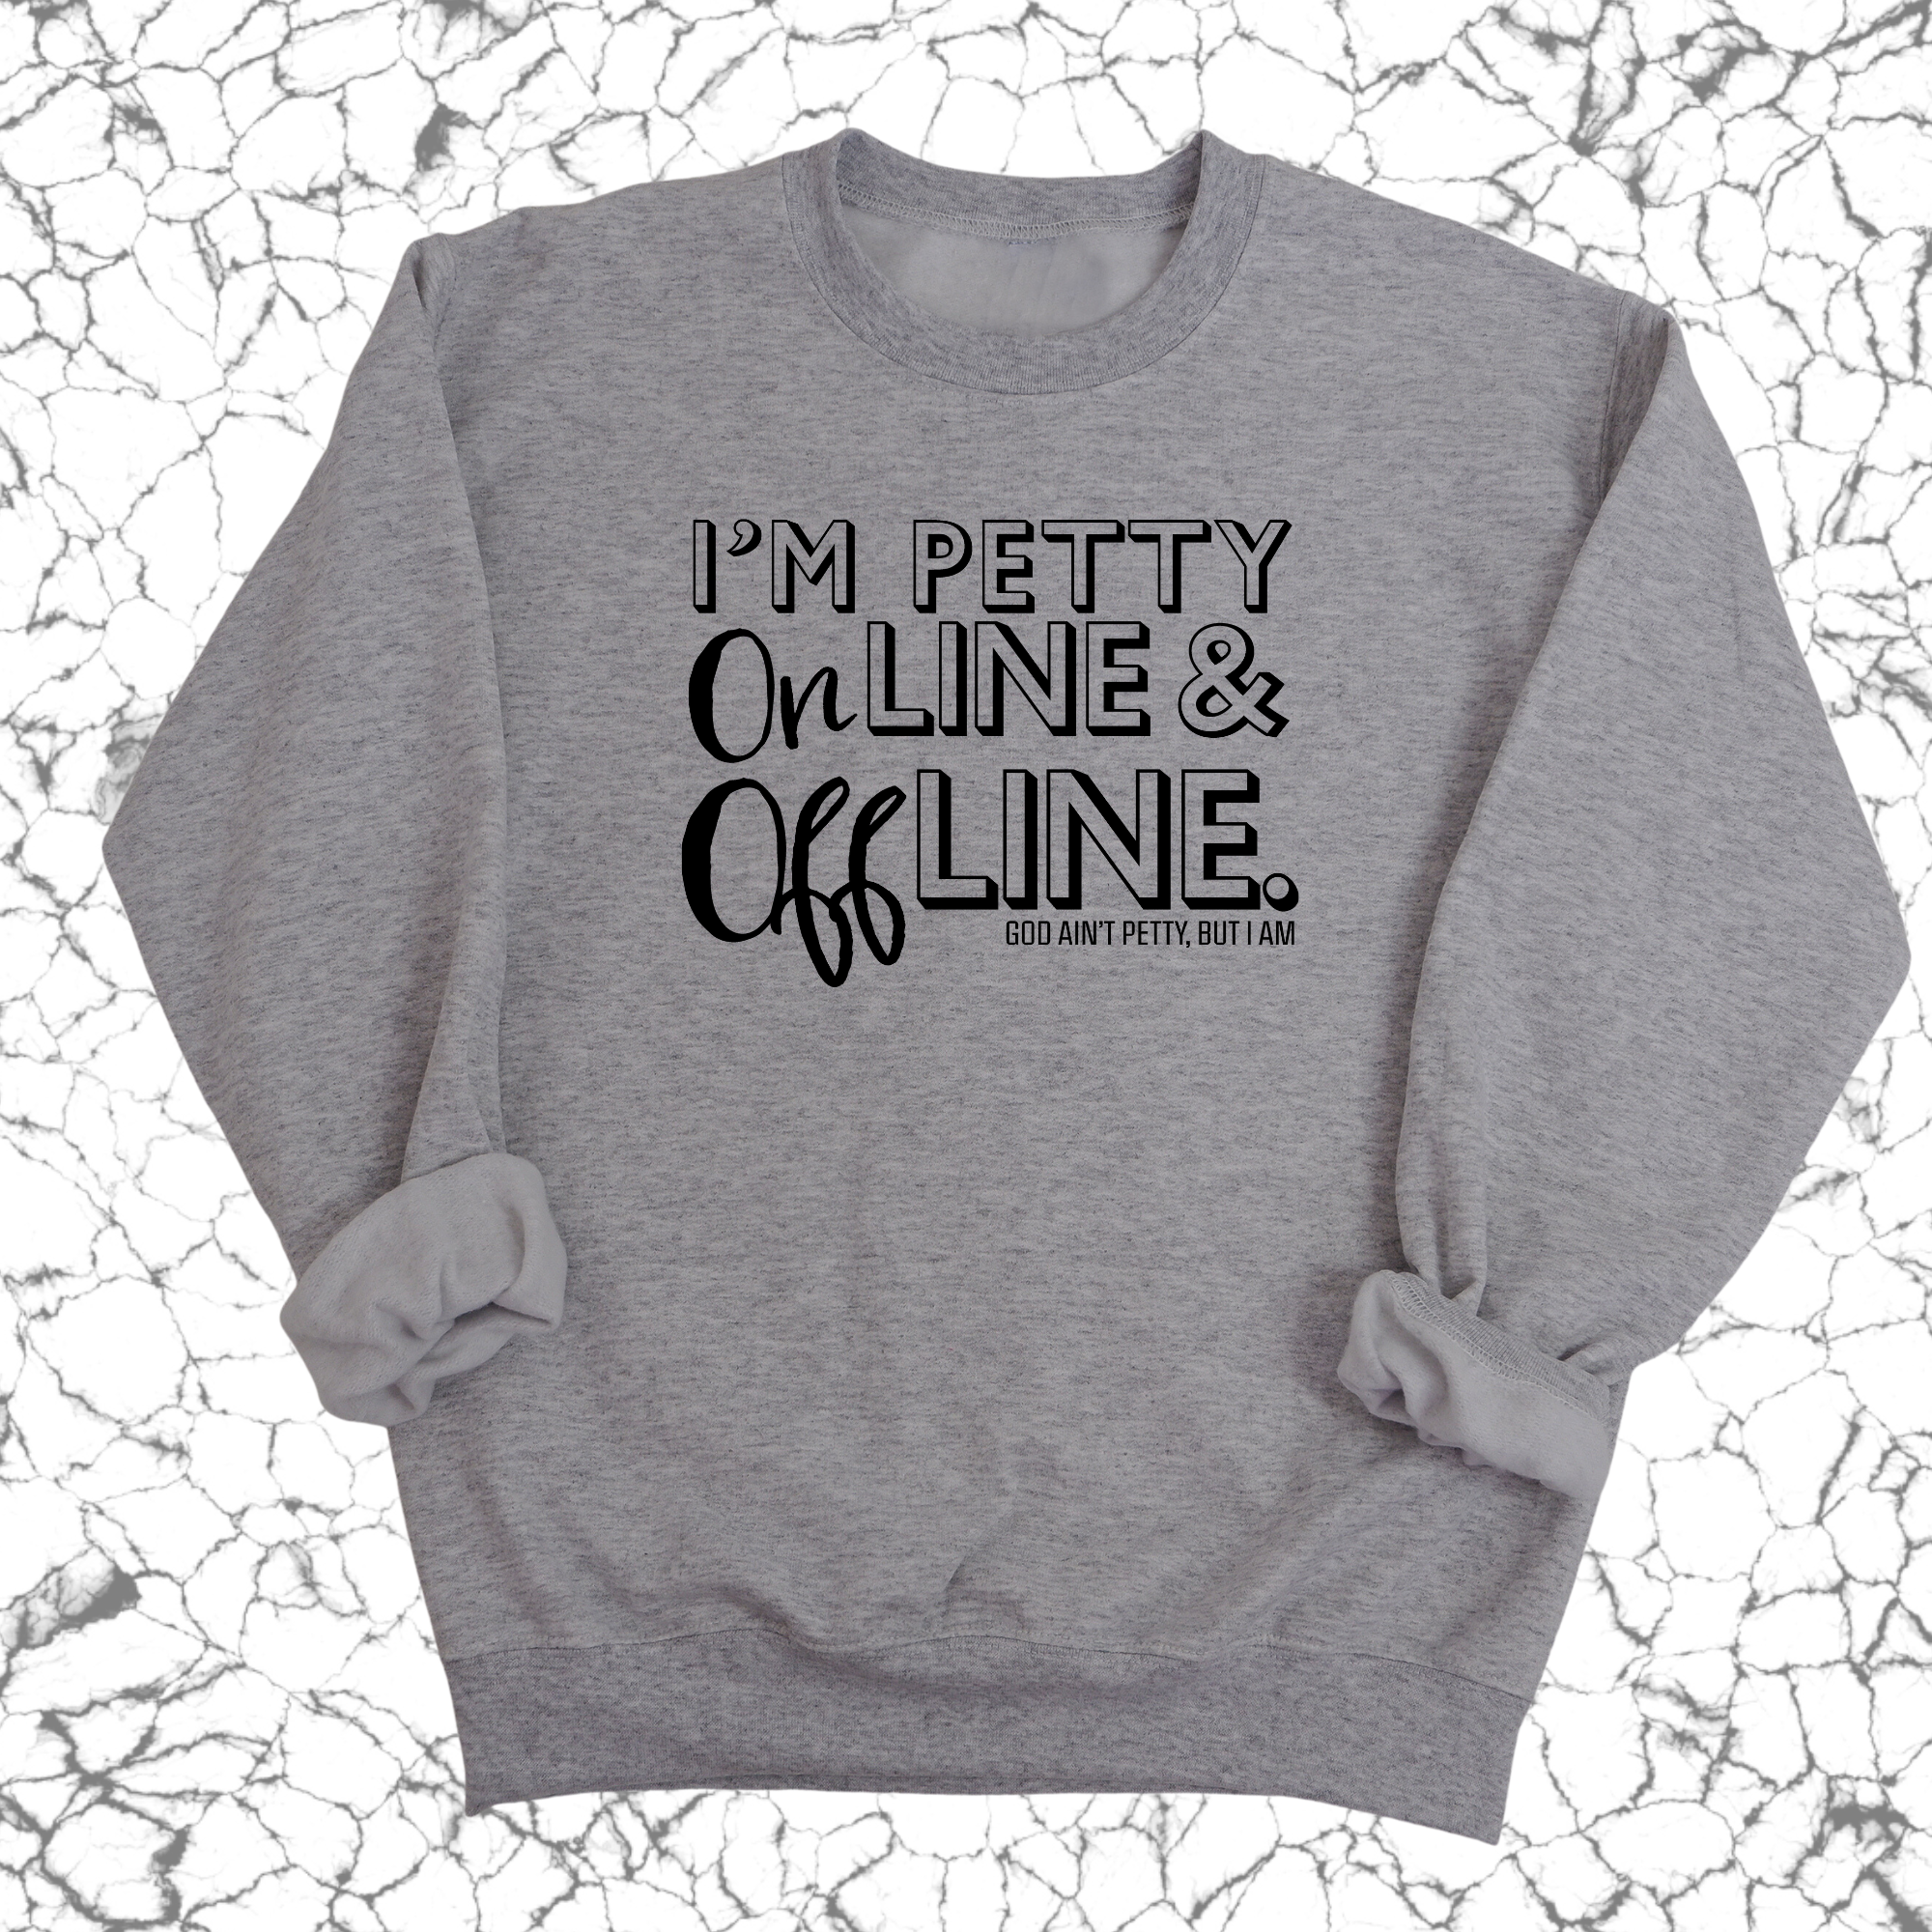 I'm Petty Online & Offline Unisex Sweatshirt-Sweatshirt-The Original God Ain't Petty But I Am